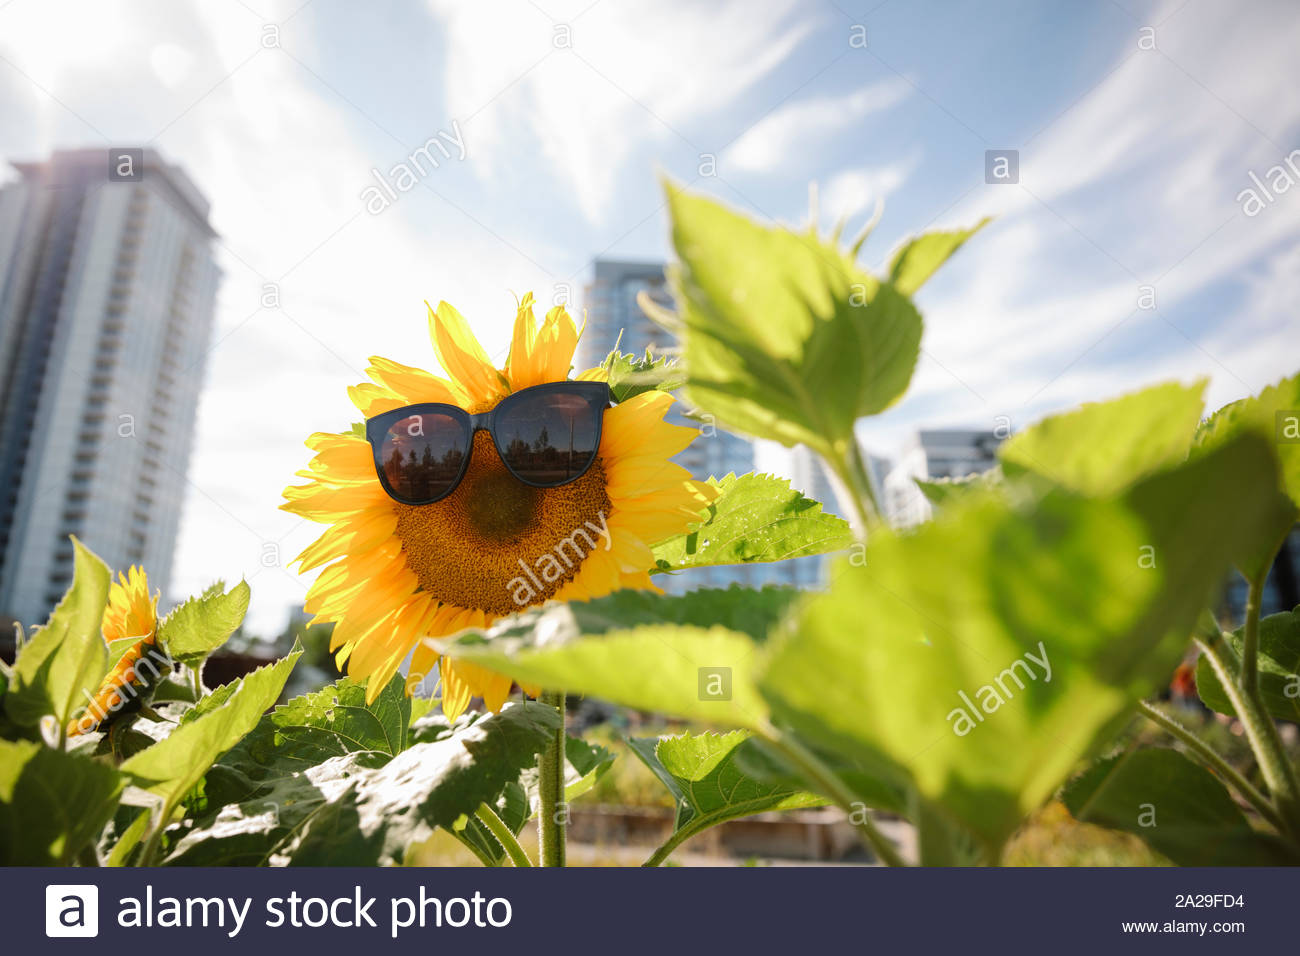 Sunglasses on vibrant sunflower in sunny, urban community garden Stock Photo